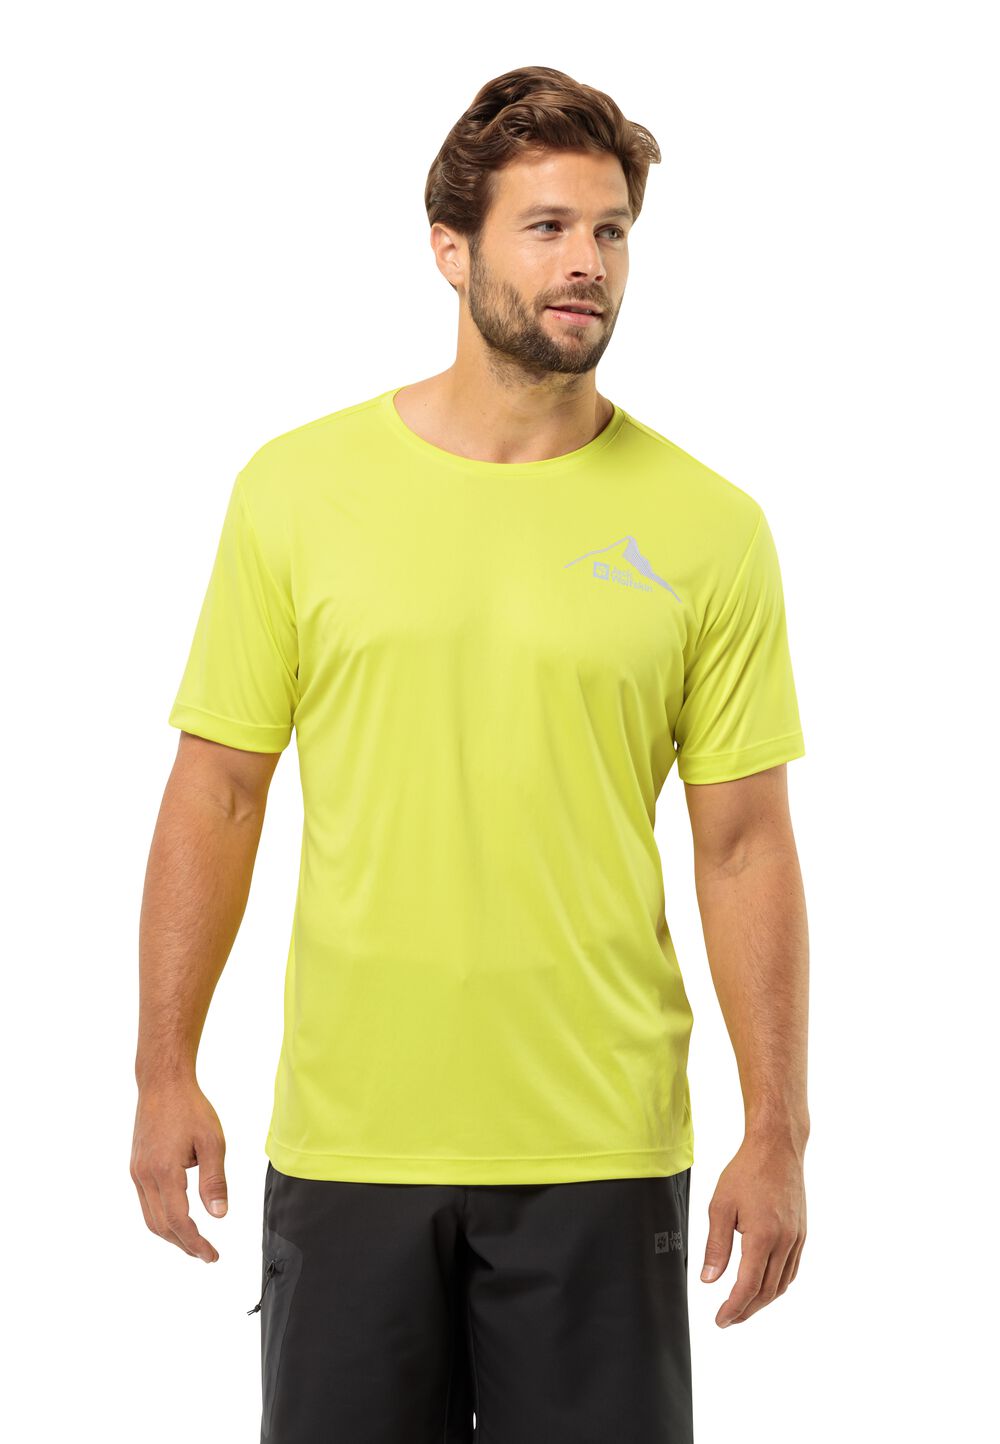 Jack Wolfskin Peak Graphic T-Shirt Men Functioneel shirt Heren L oranje firefly